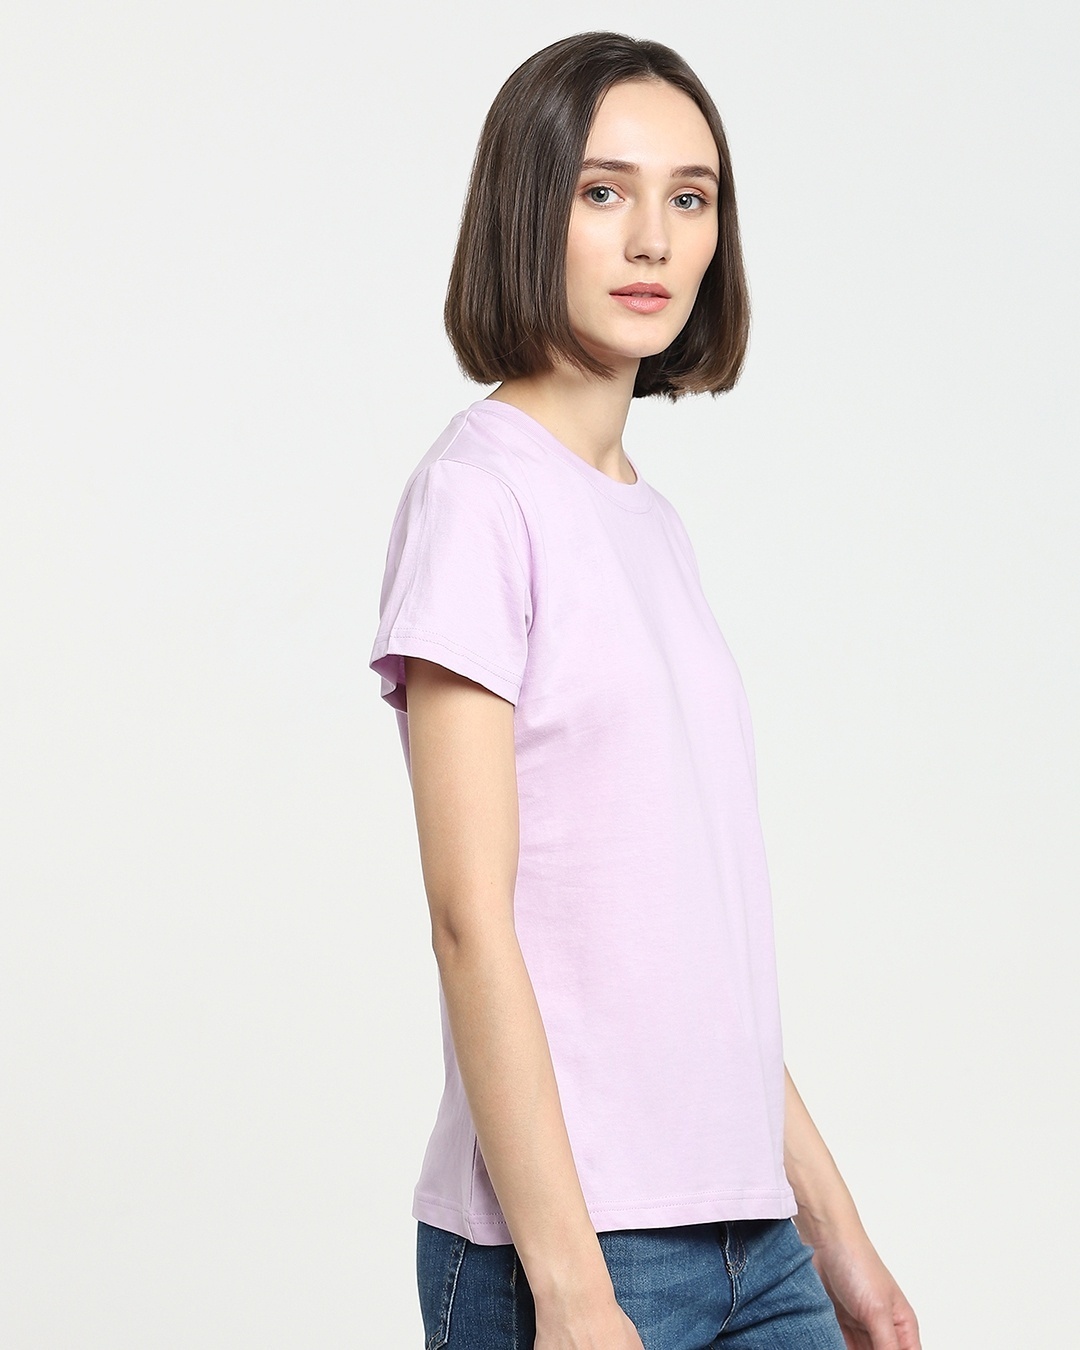 Shop Women's Whit & Purple Slim Fit T-shirt Pack of 2